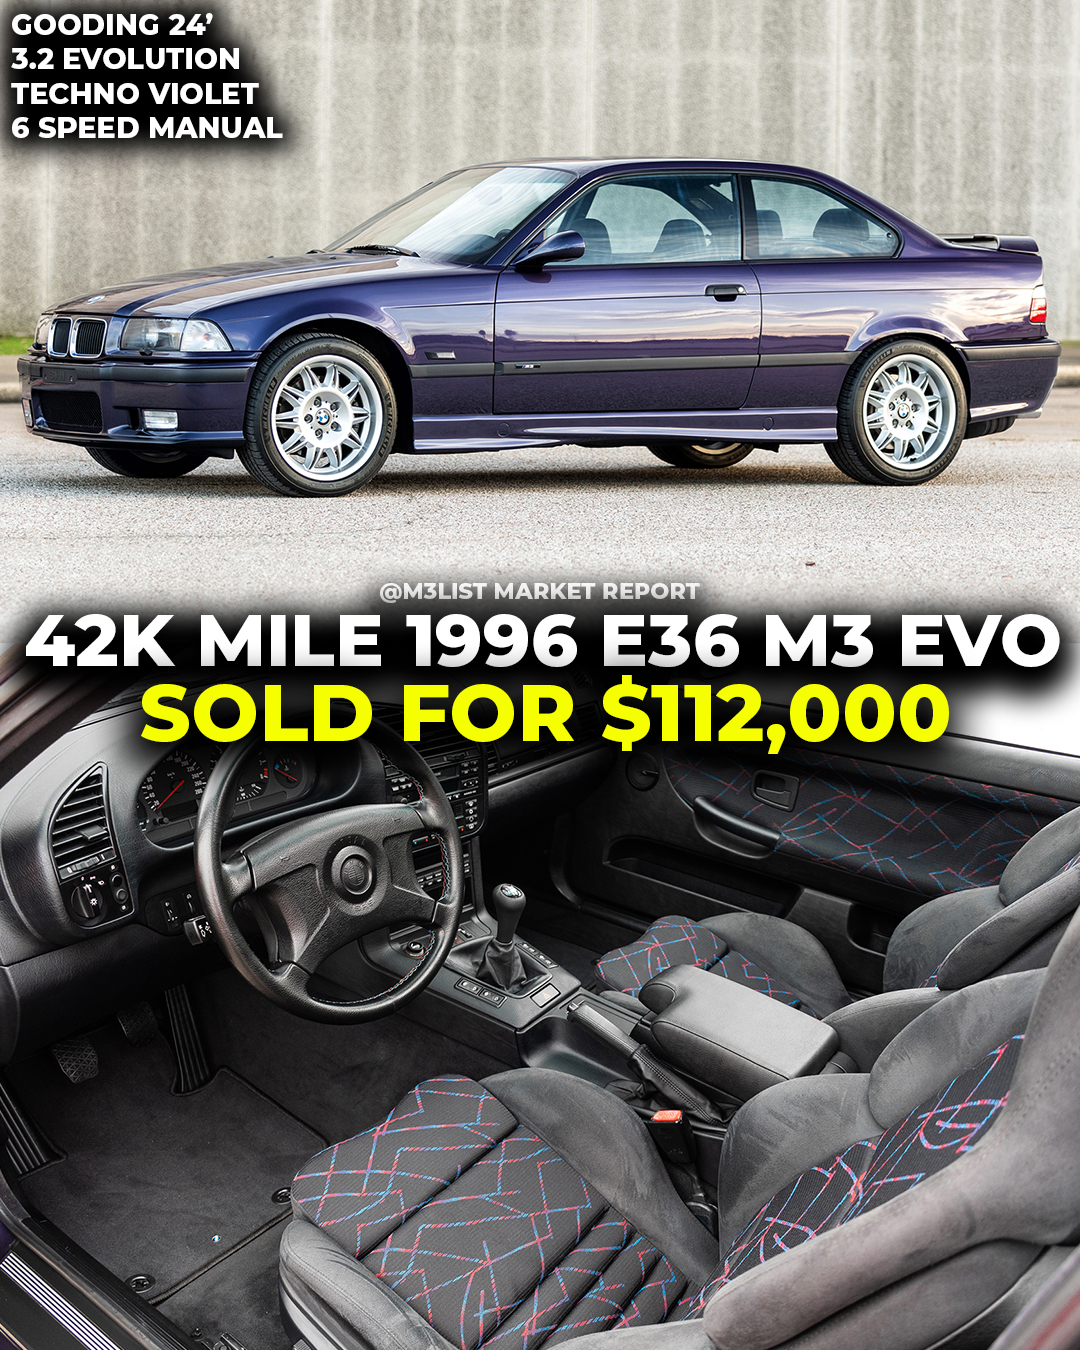 1996 BMW E36 M3 3.2 Evolution sells for $112,000 through Gooding!